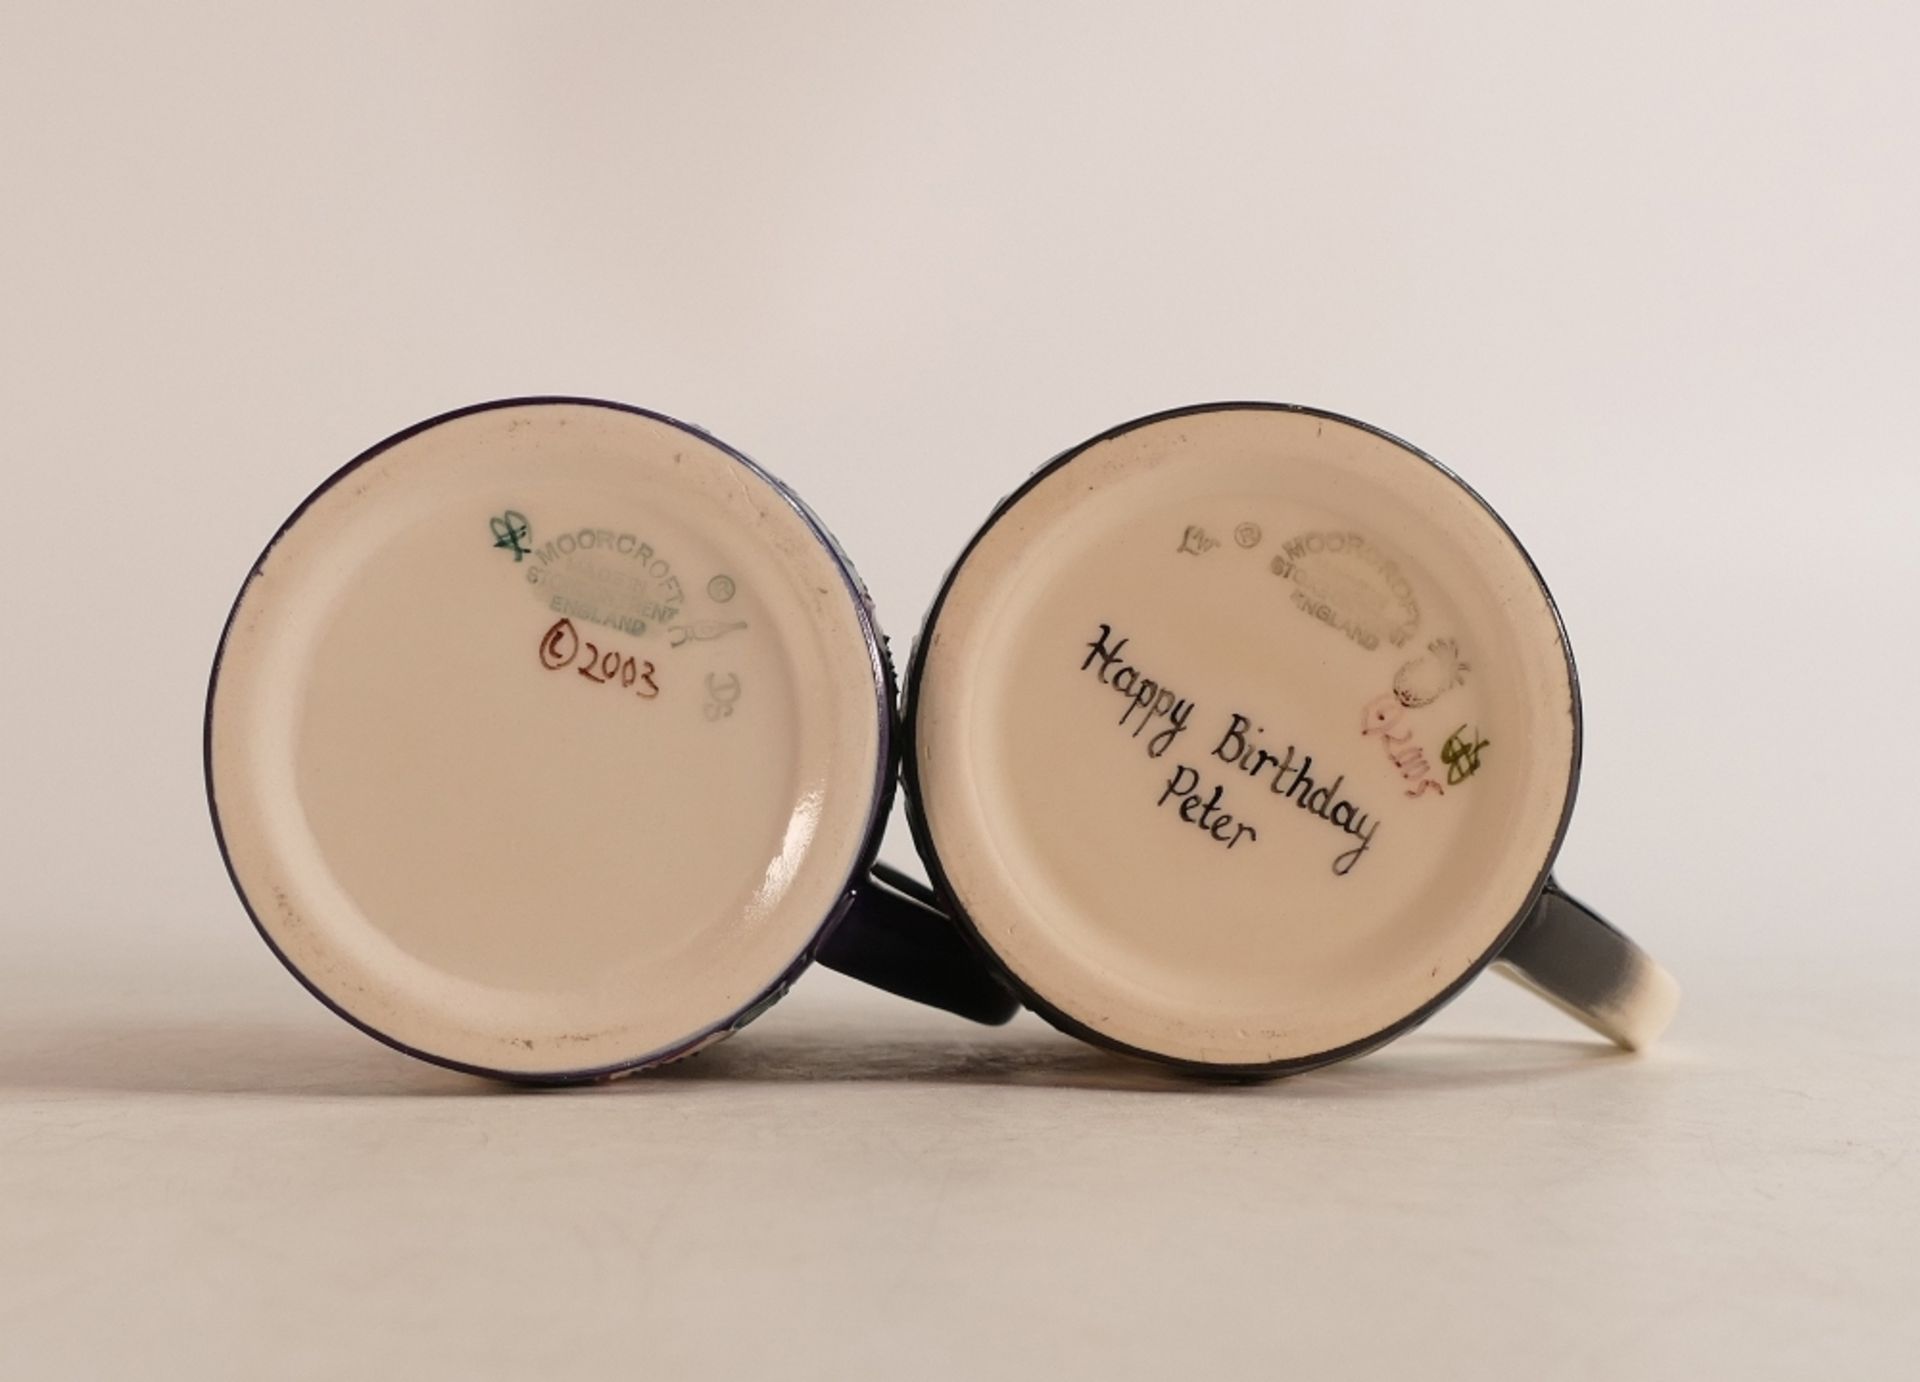 Two Moorcroft mugs to include Personalised mug for peter and 2003 year mug (2) - Image 2 of 2